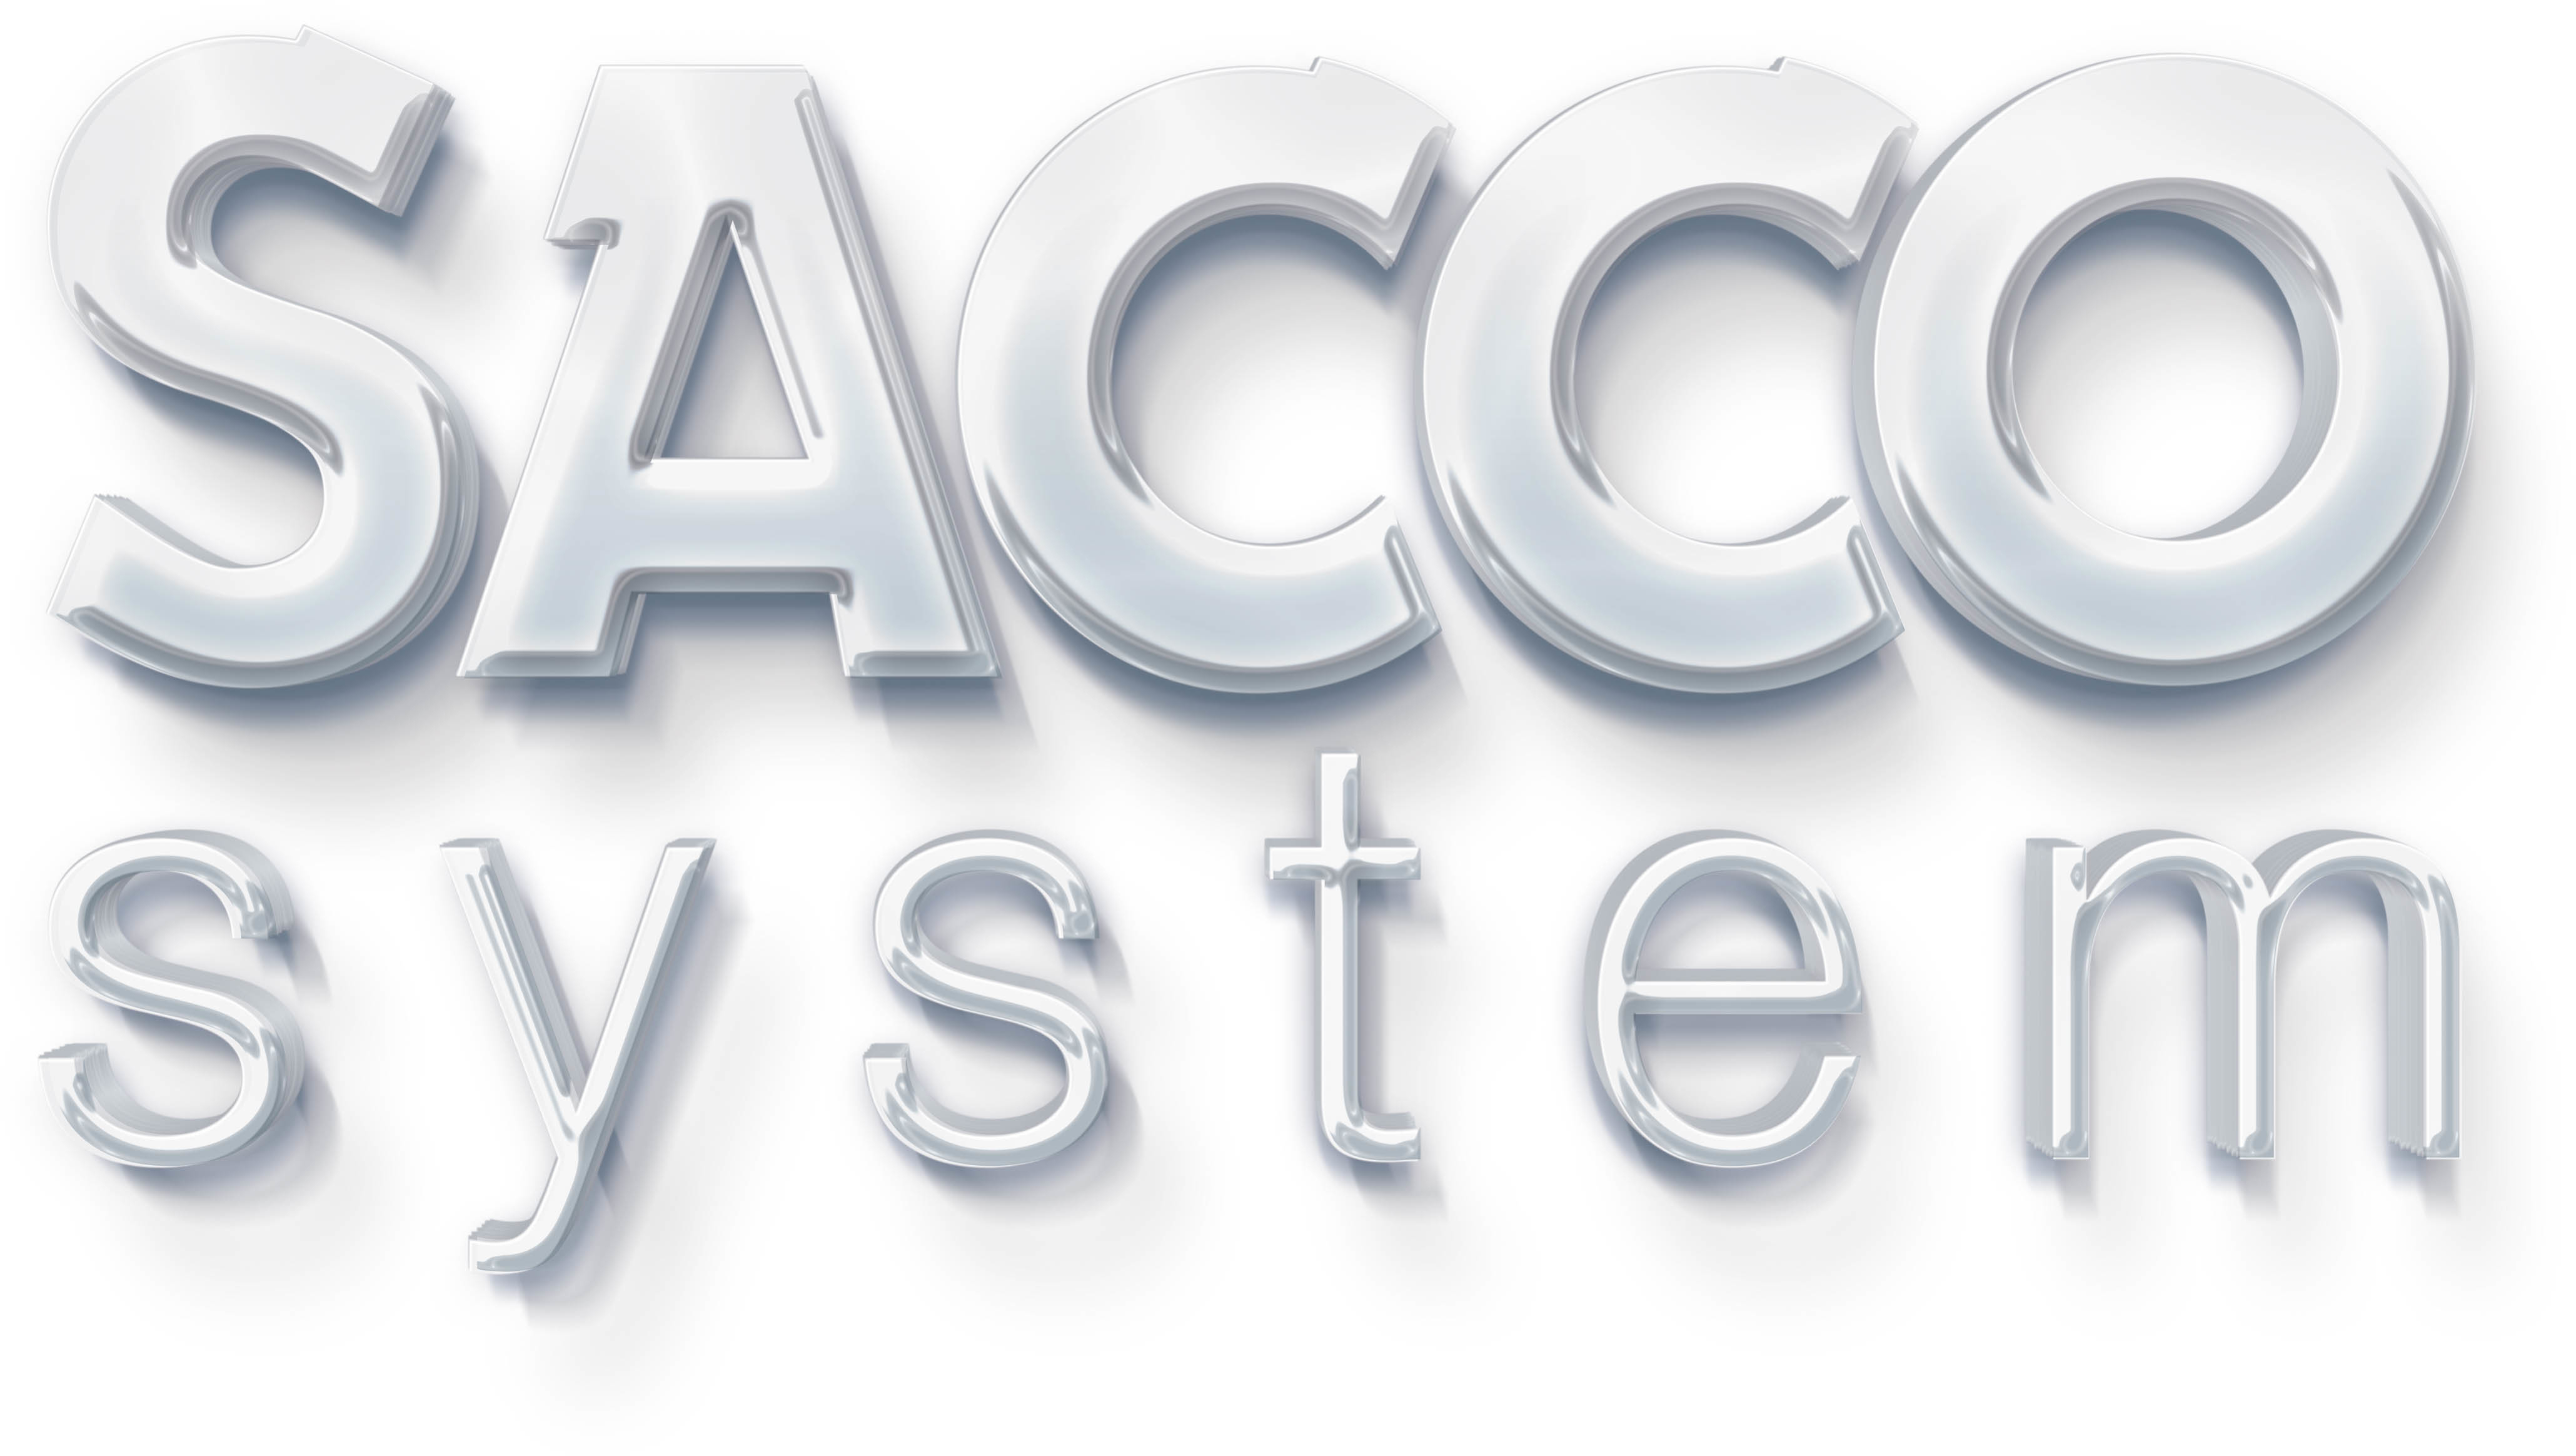 Sacco System